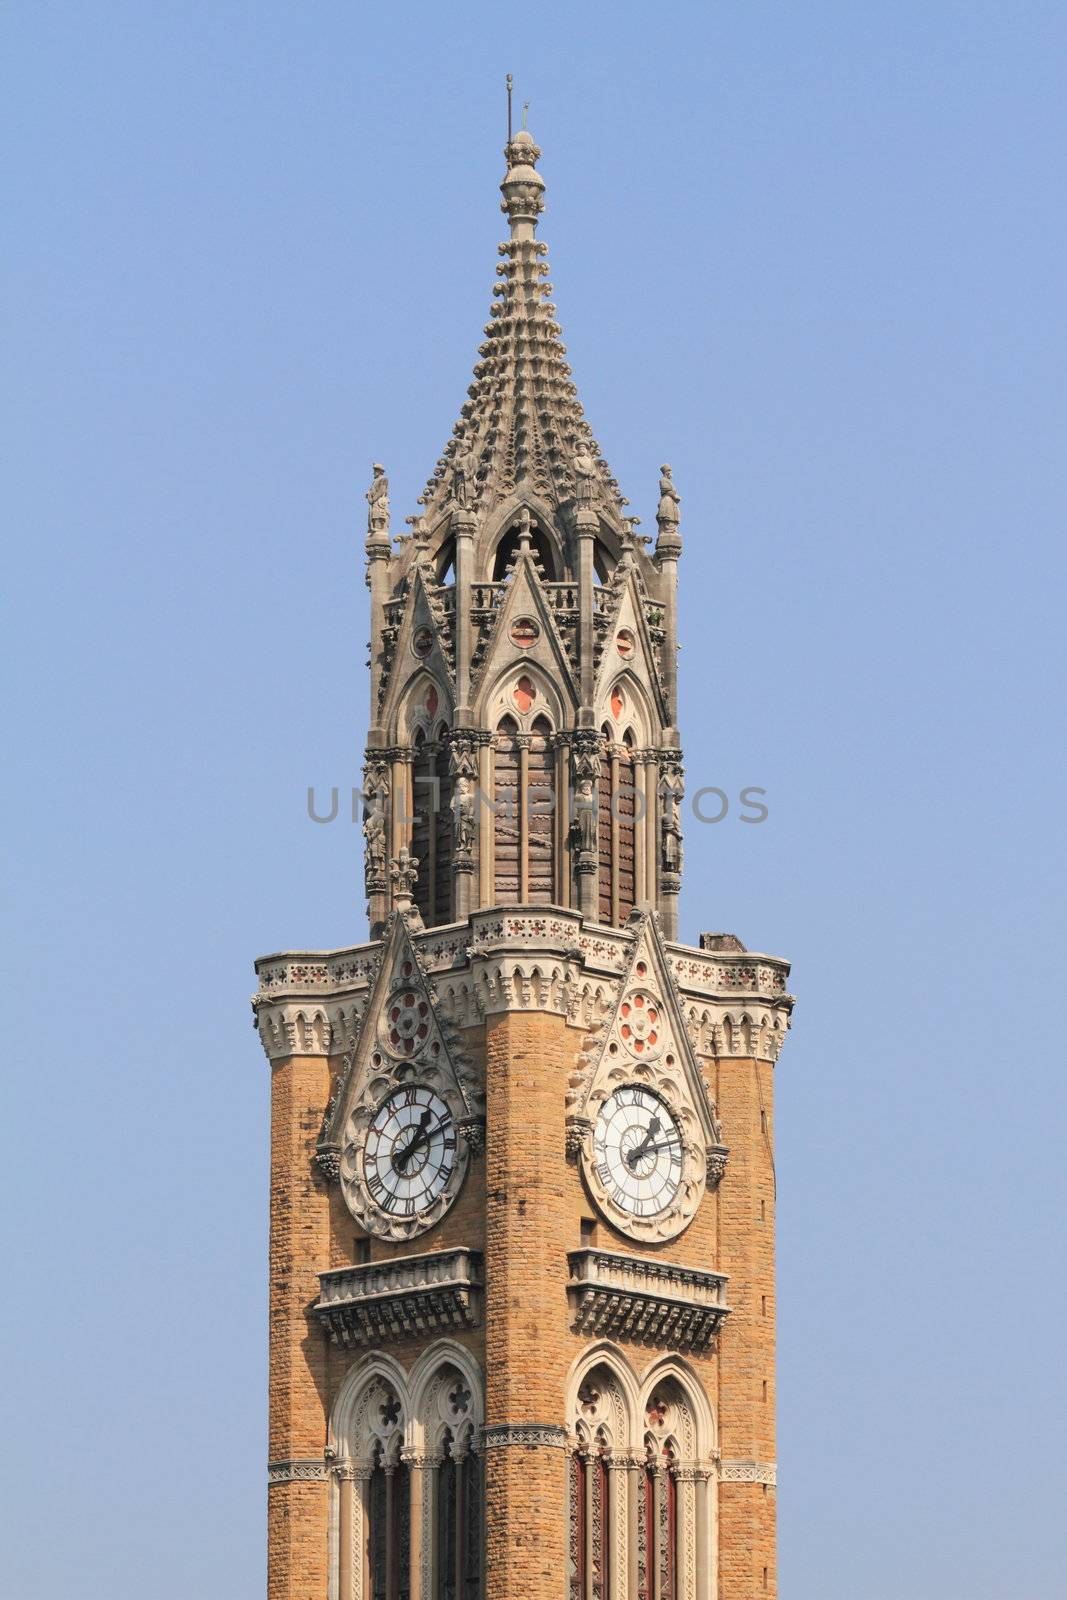 Rajabai Tower - historic clock tower, Bombay, India, Asia